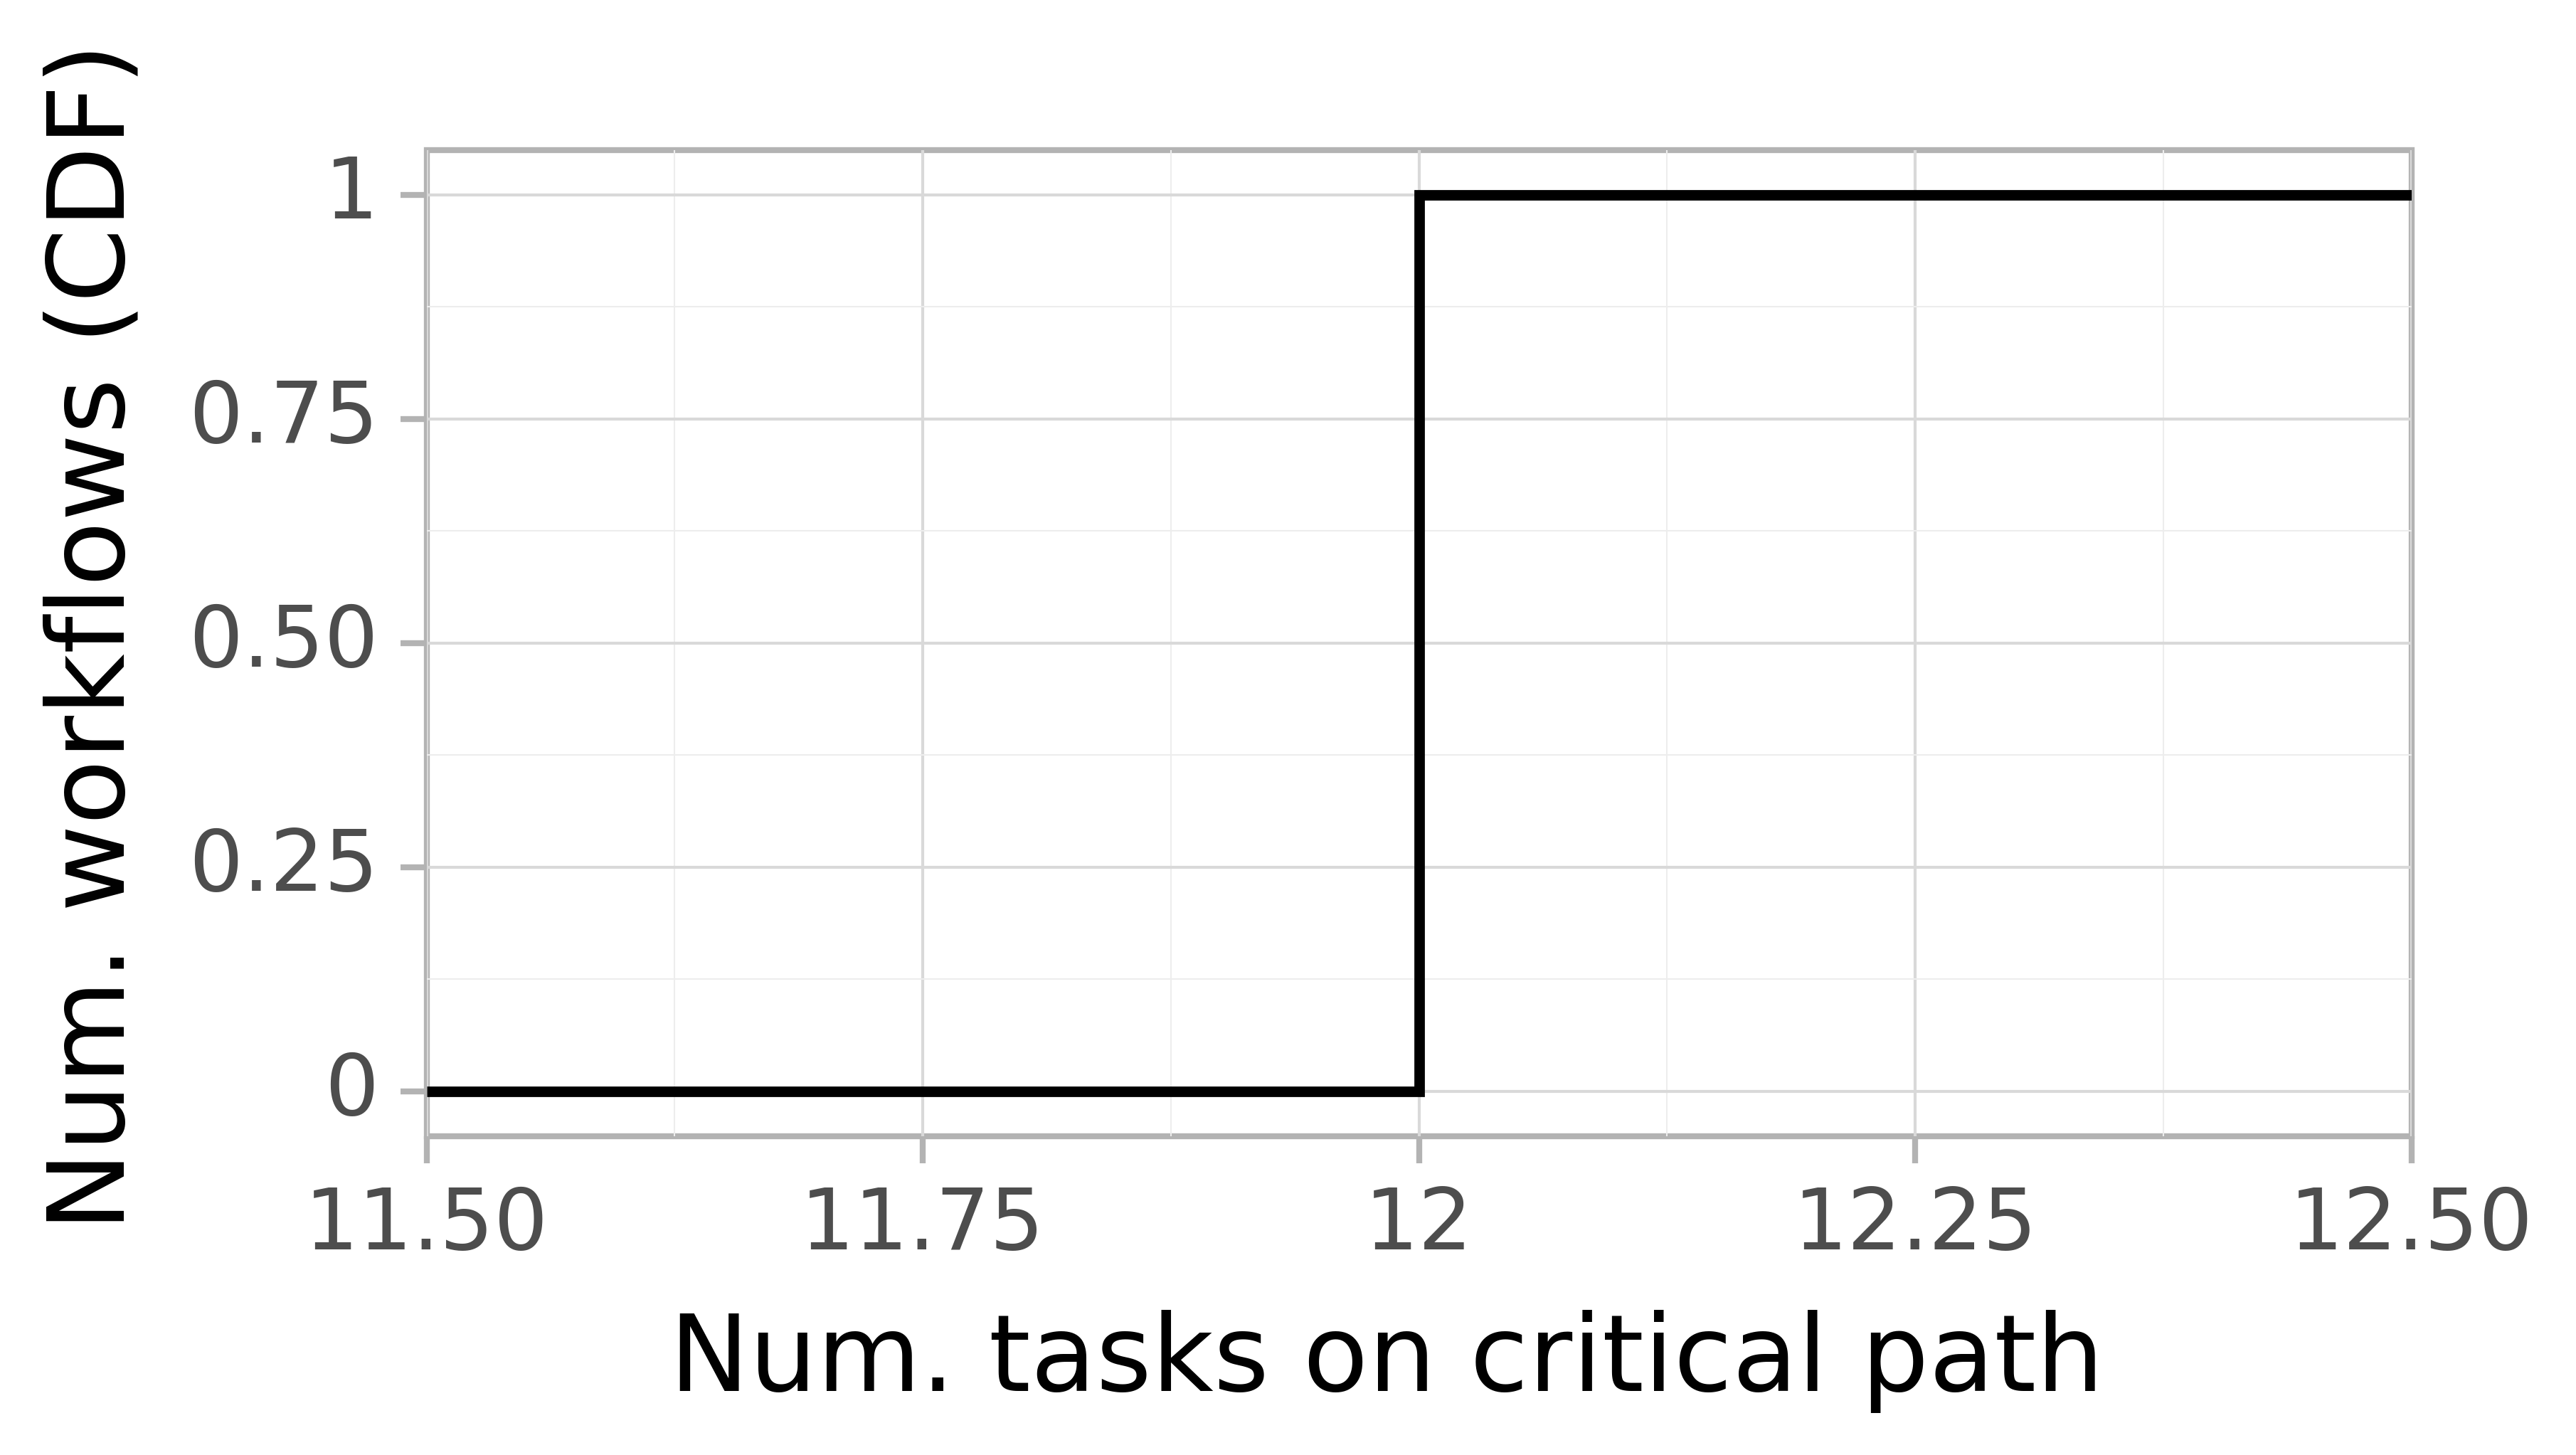 Job critical path task count graph for the workflowhub_soykb_grid5000_schema-0-2_soykb-g5k-run002 trace.